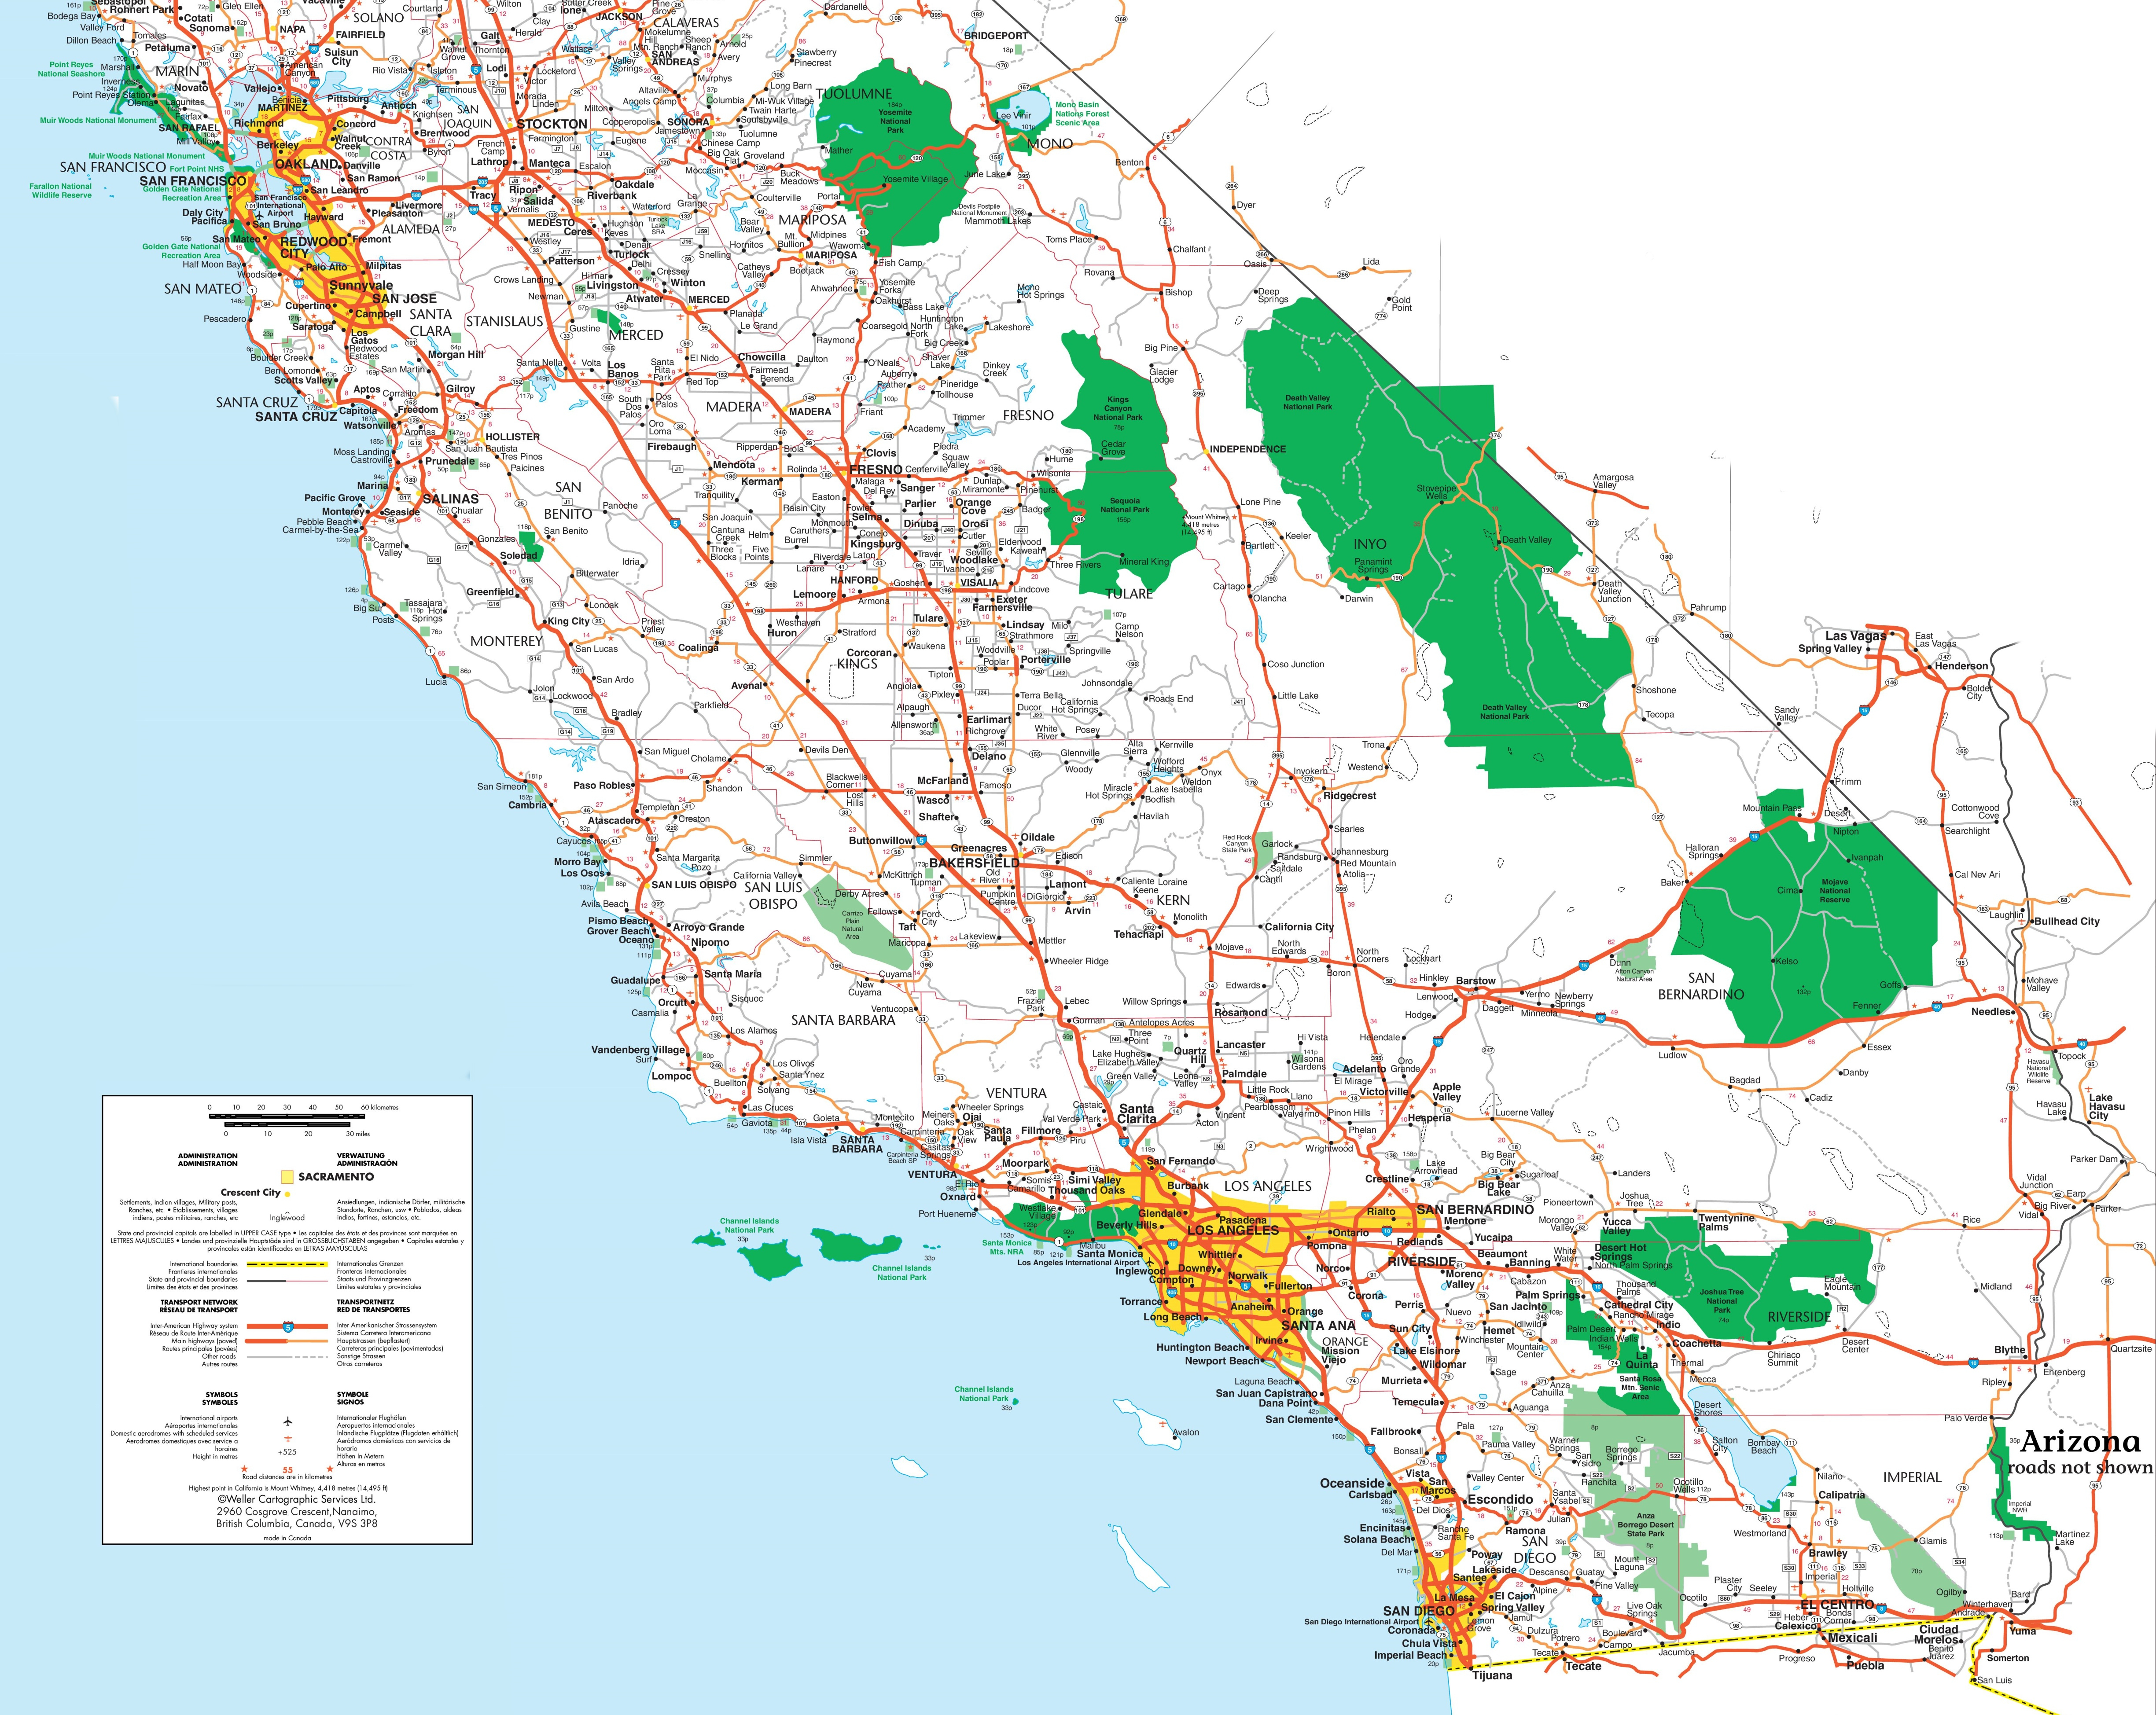 Southern California Beach Cities Map - Klipy - Map Of Southern California Coast